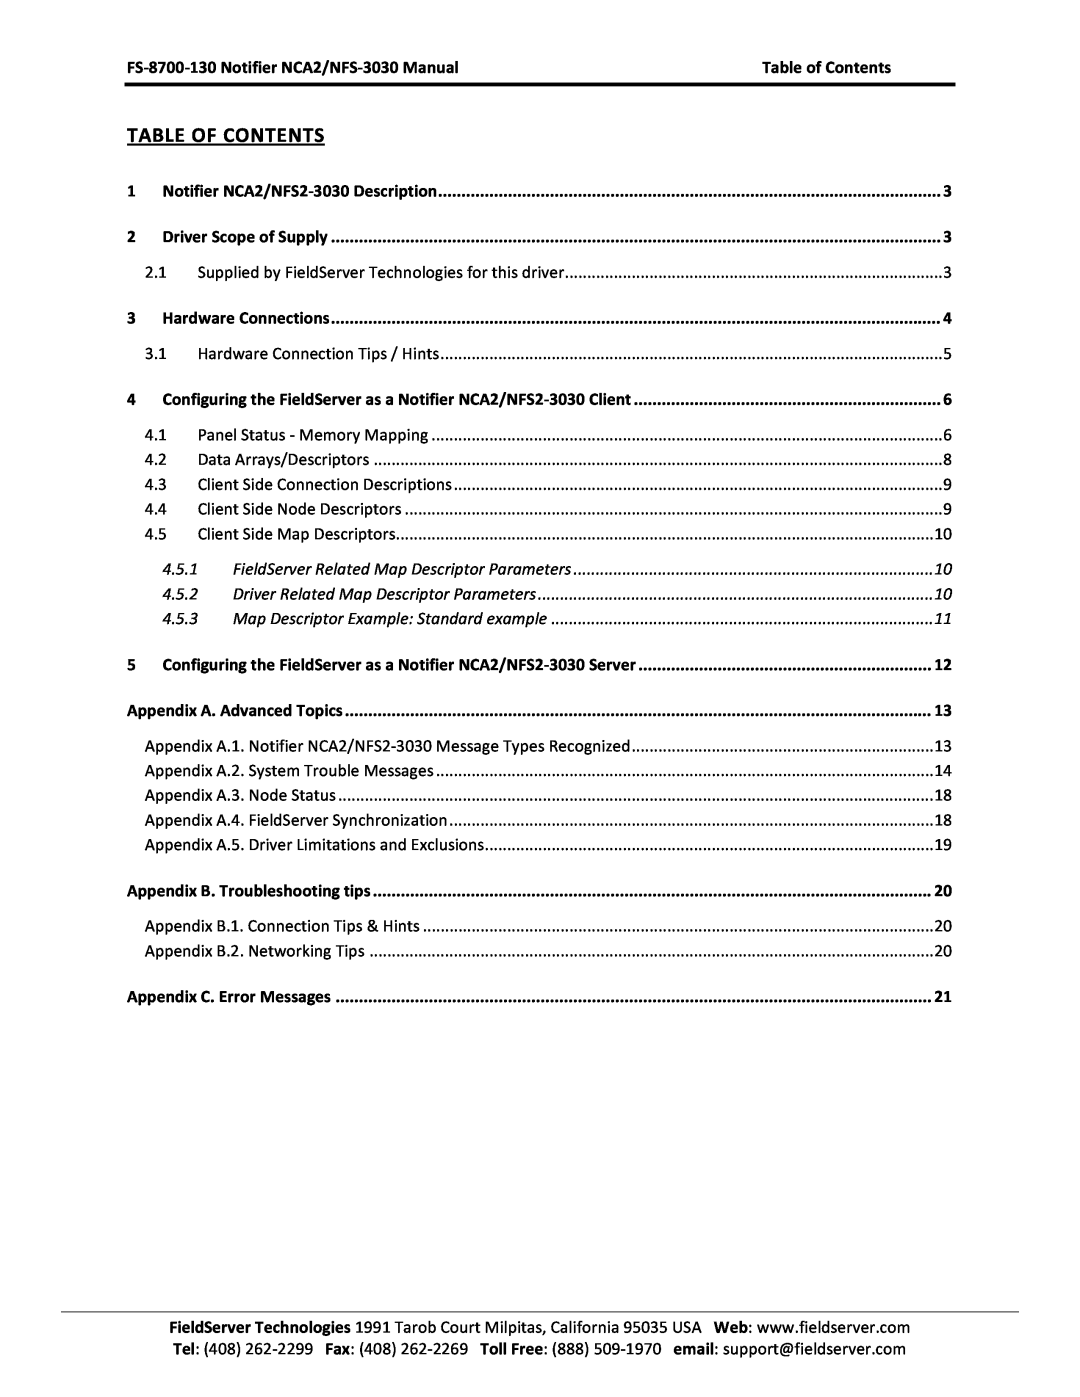 FieldServer Table Of Contents, FS-8700-130 Notifier NCA2/NFS-3030 Manual, Table of Contents, Driver Scope of Supply 